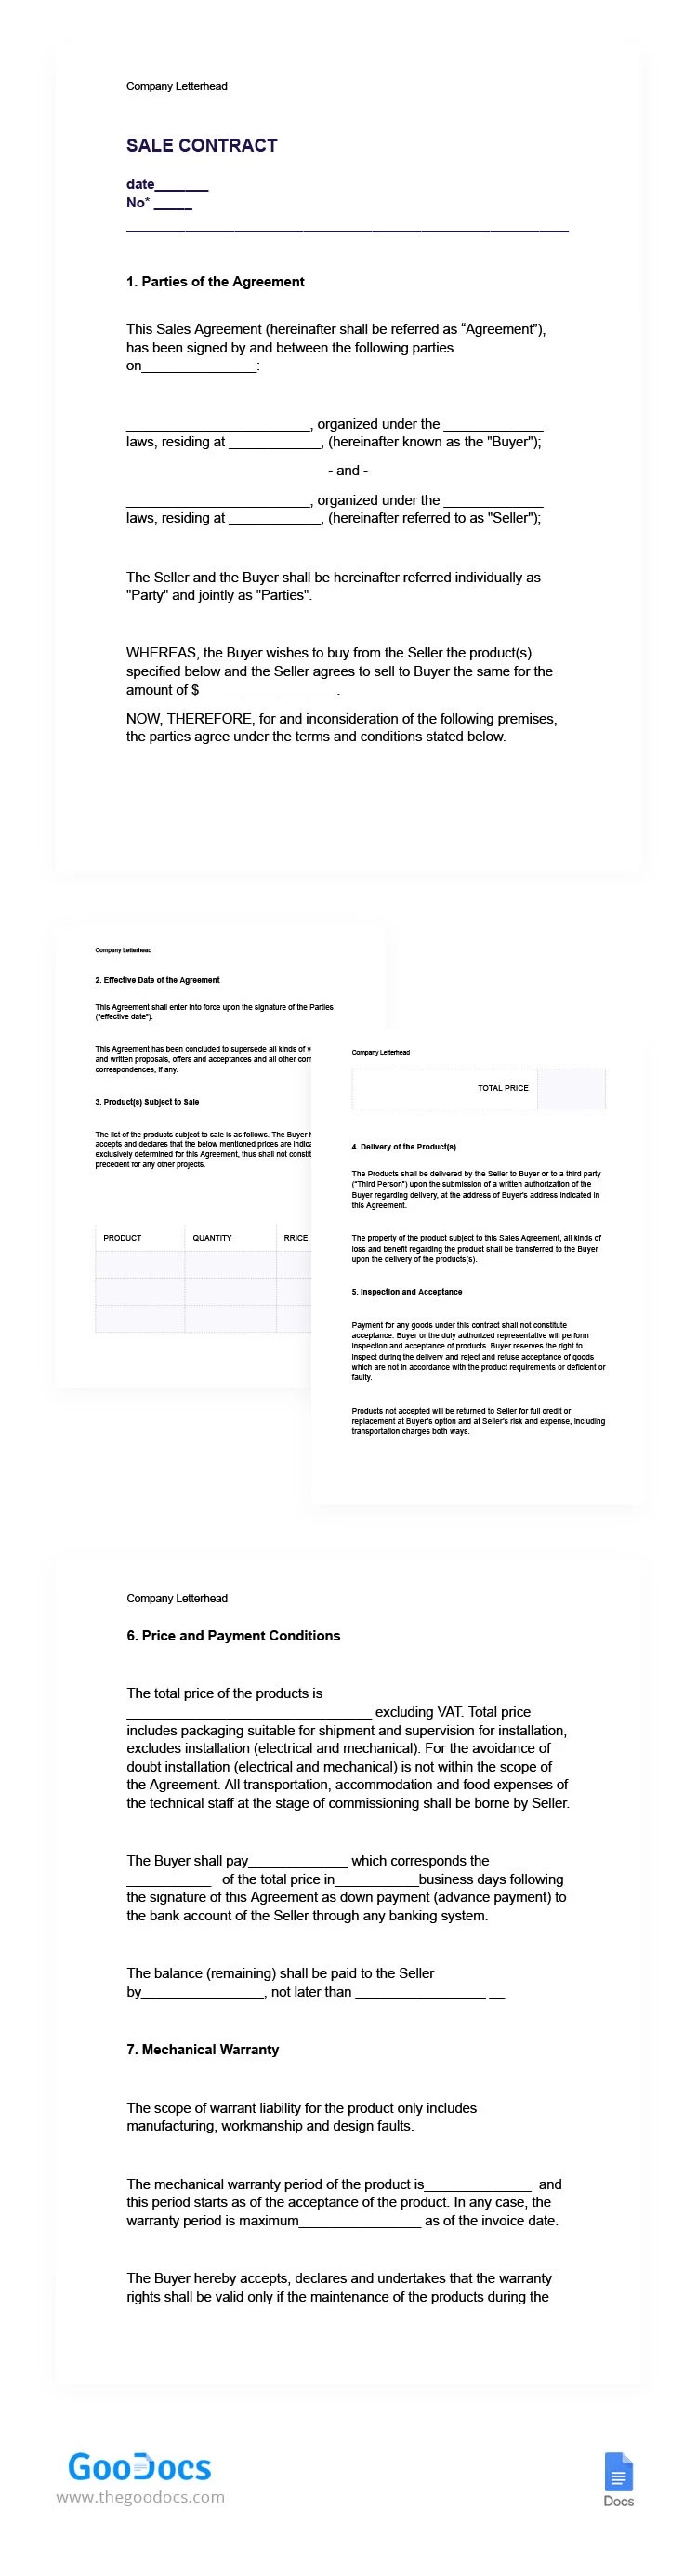 Contrat de vente - free Google Docs Template - 10065731